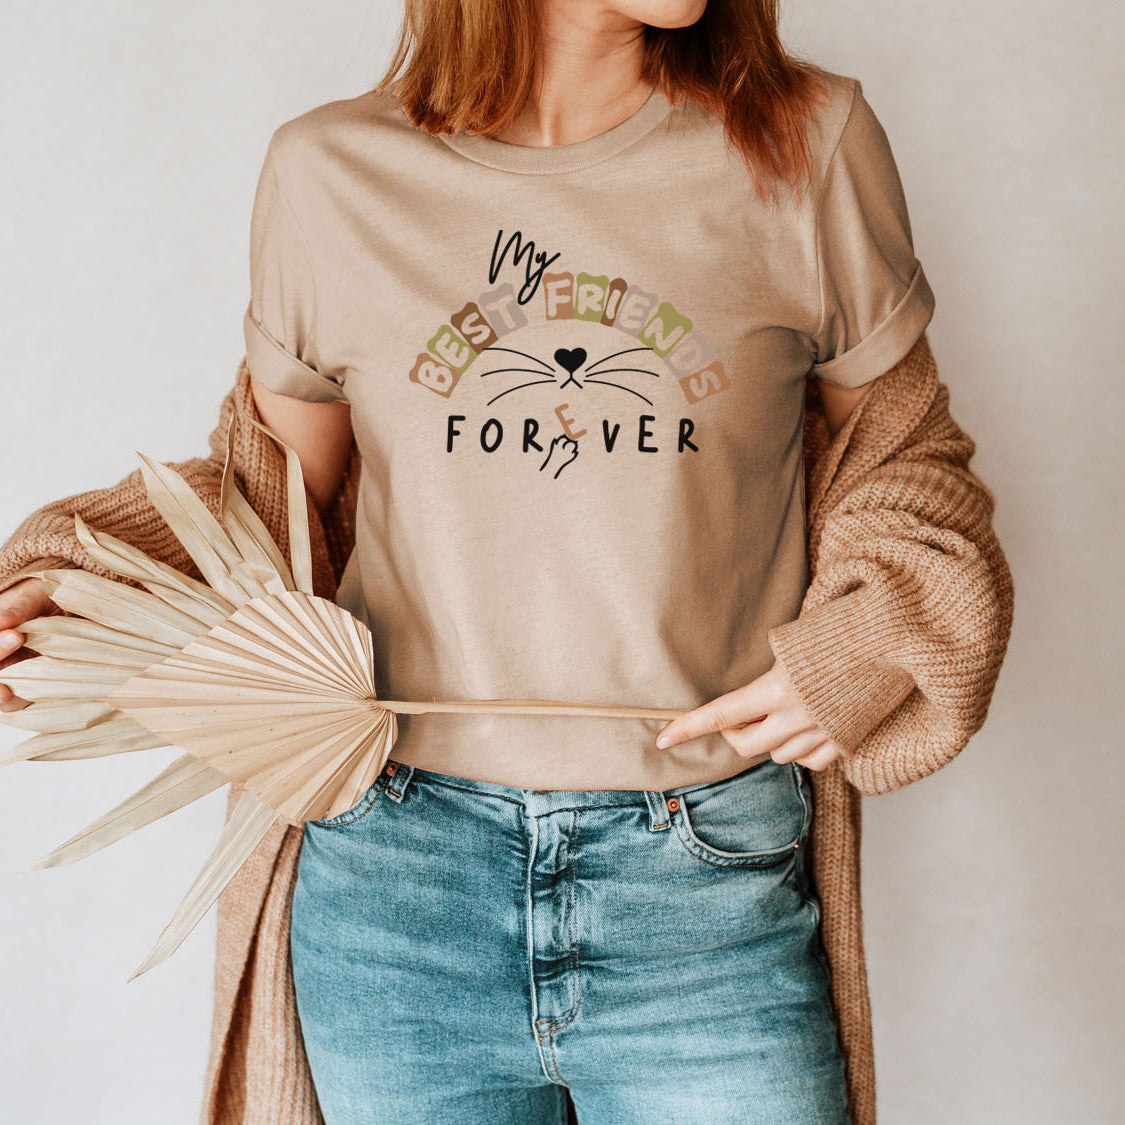 My Best Friends Forever Kitty Ver. T-shirt - Fun Pet Love Design Printed Tee Shirt